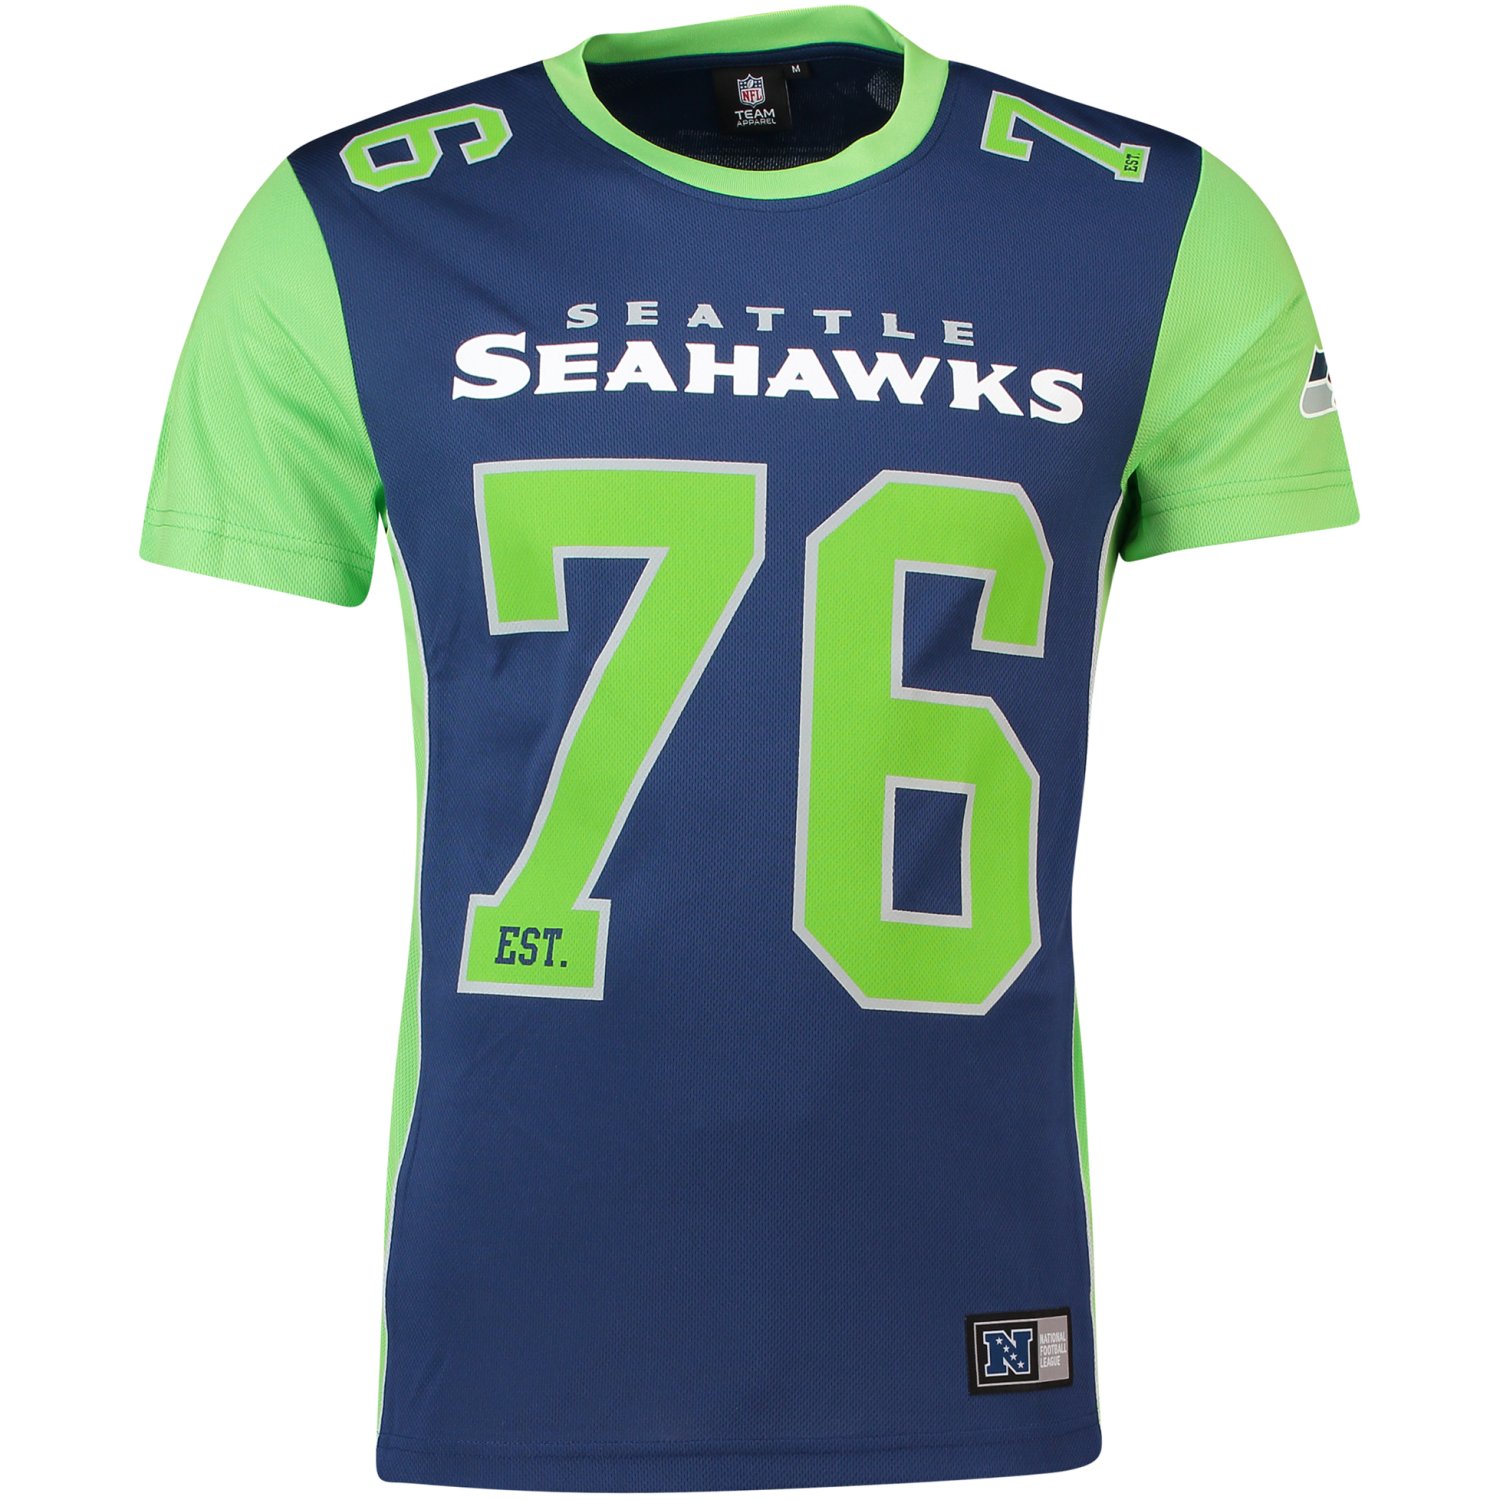 Majestic Mesh Polyester Jersey Shirt - NFL Seattle Seahawks   Jerseys   Bekleidung ...